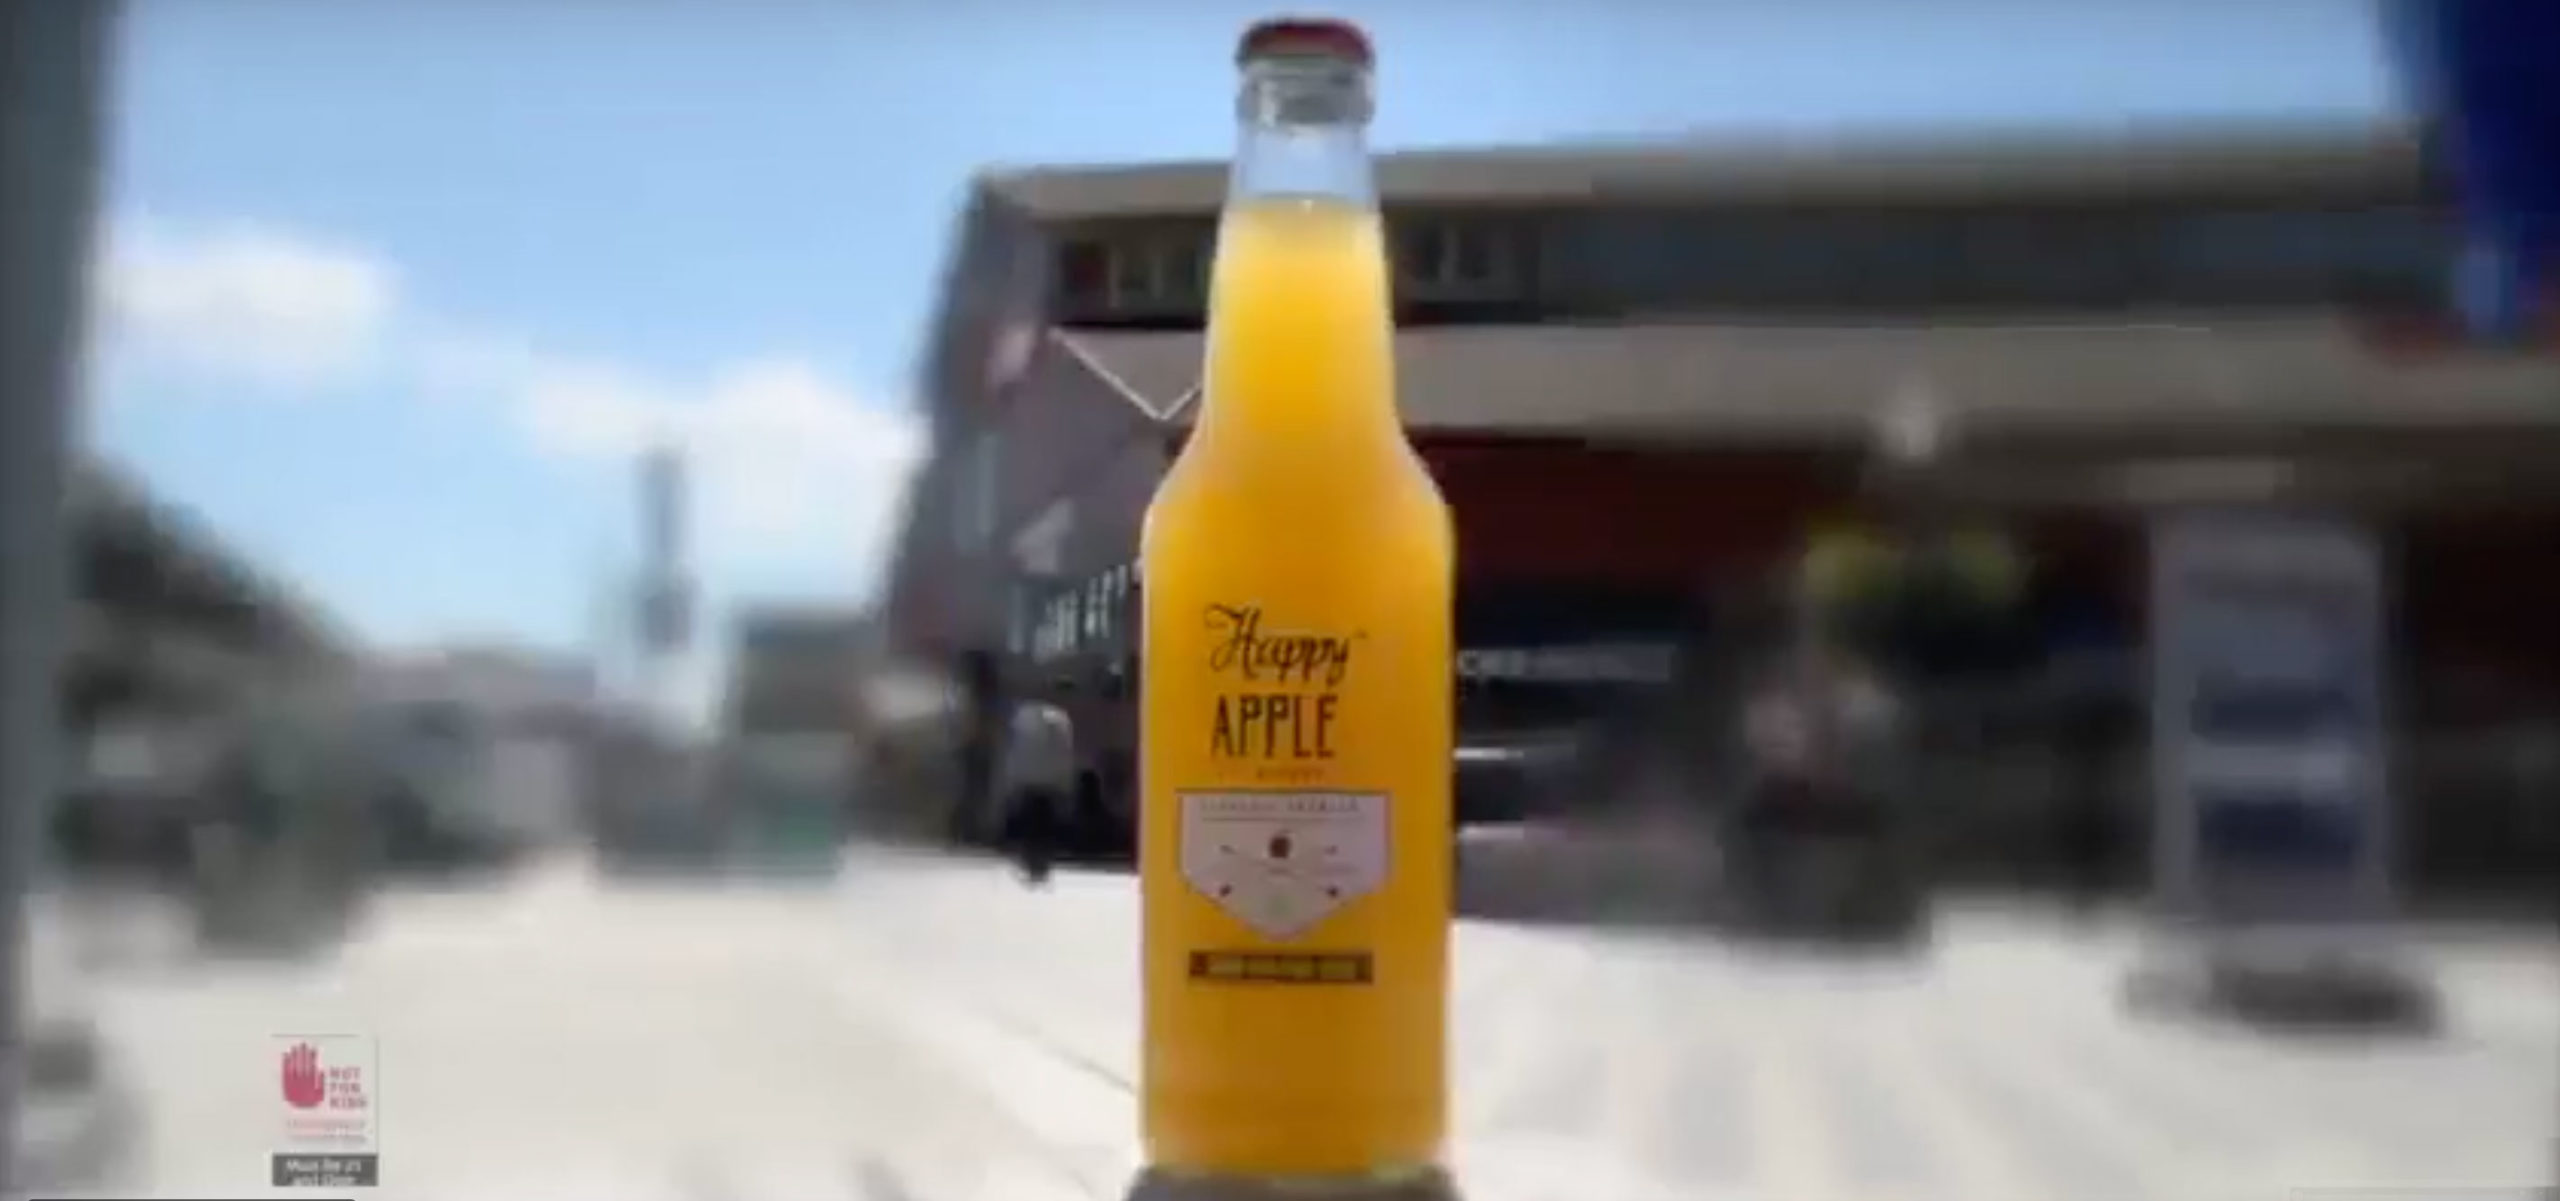 Happy Apple: The “Crowd-Pleaser” Beverage